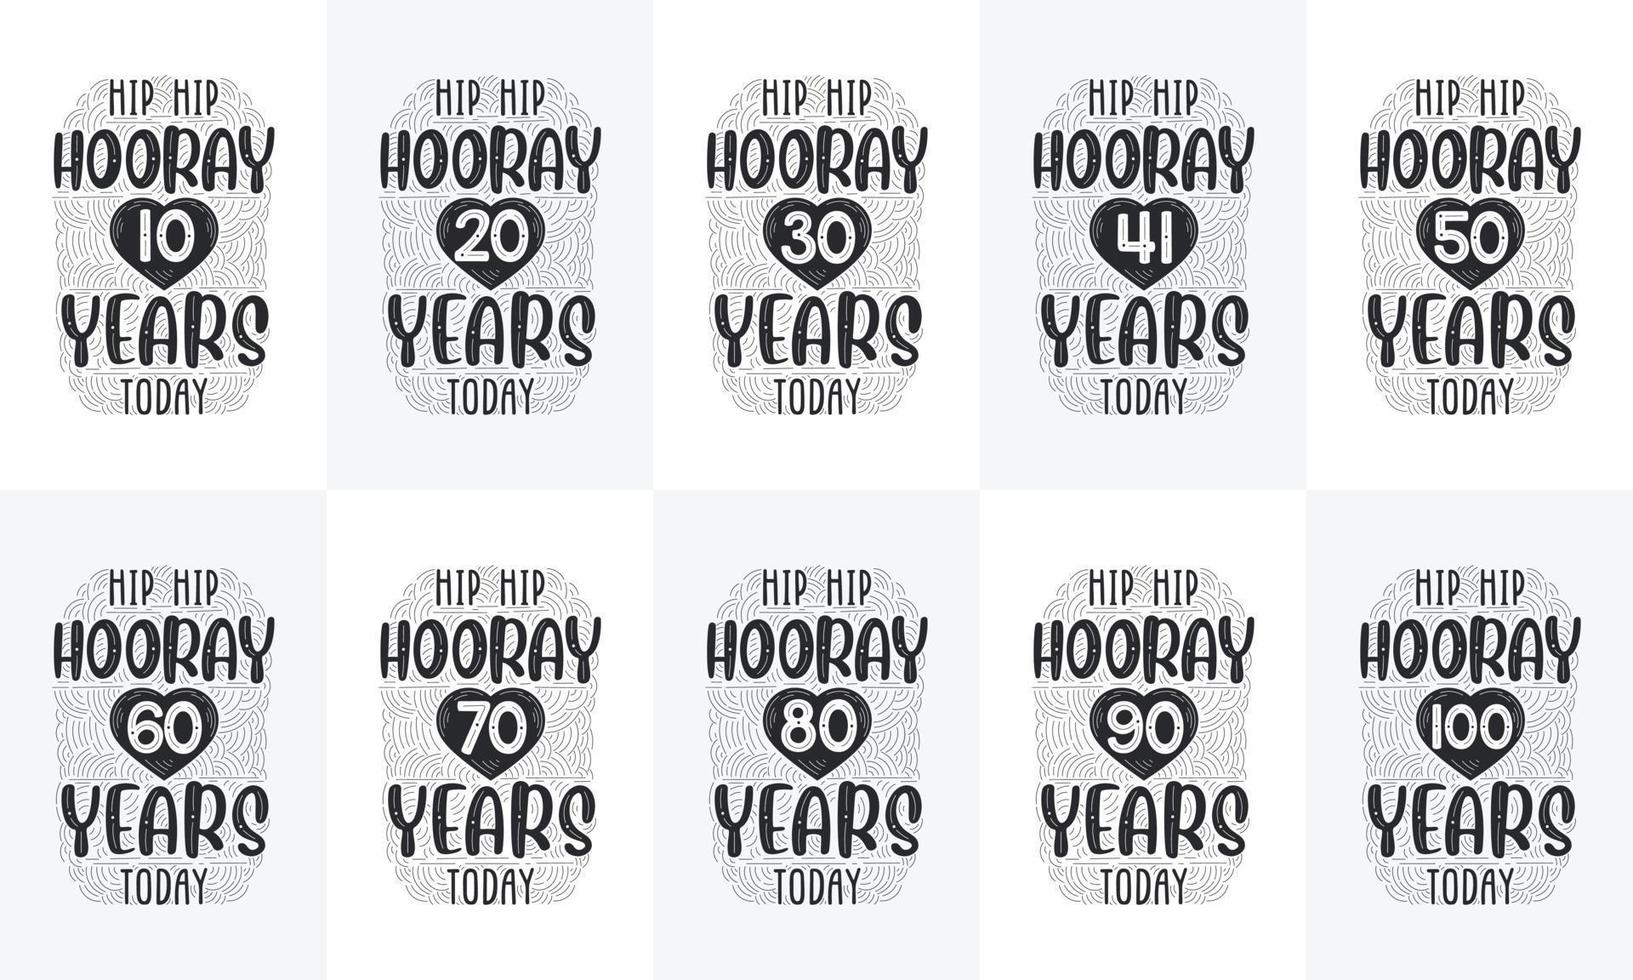 Happy Birthday design set. Best Birthday Typography quote design bundle. Hip Hip Hooray 10, 18, 20, 30, 40, 50, 60, 70, 80, 90, 100 years today vector